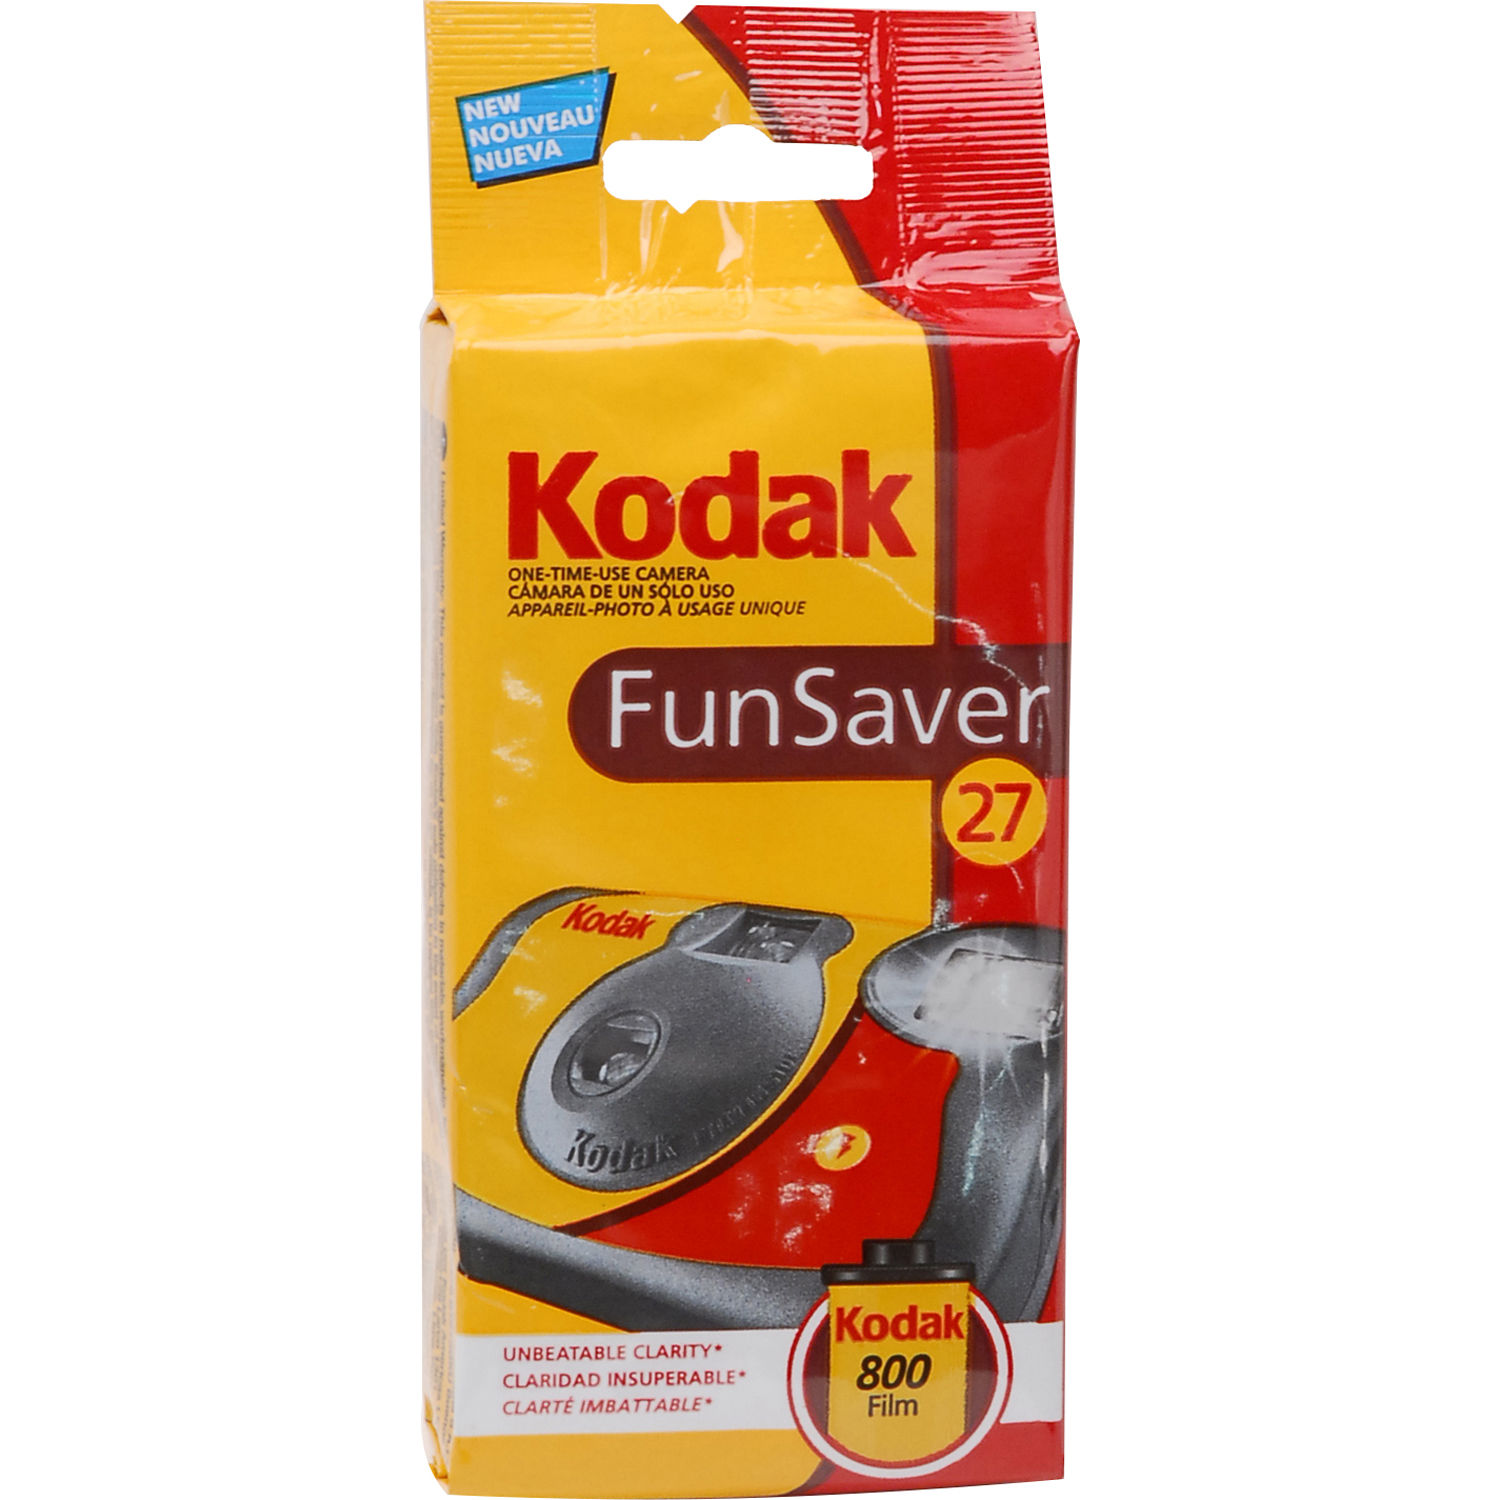 Kodak Funsaver Single Use Disposable 35mm Camera with Flash 27EXP